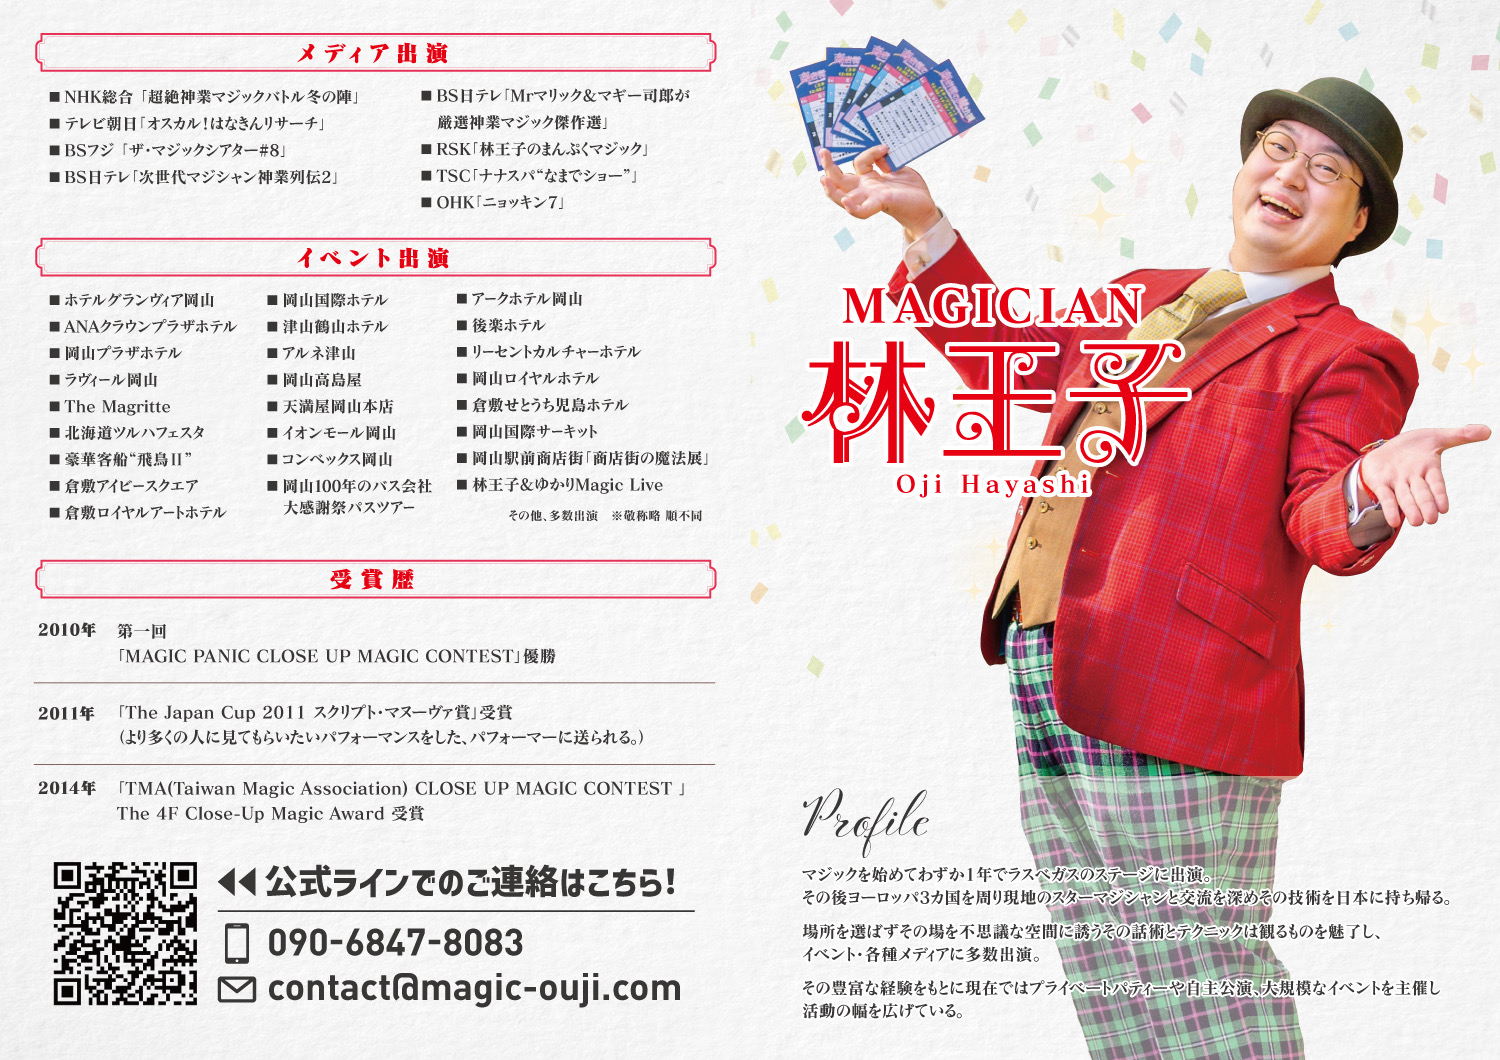 magician林王子 オフィシャルウェブサイト - Ouji Hayashi Official Website